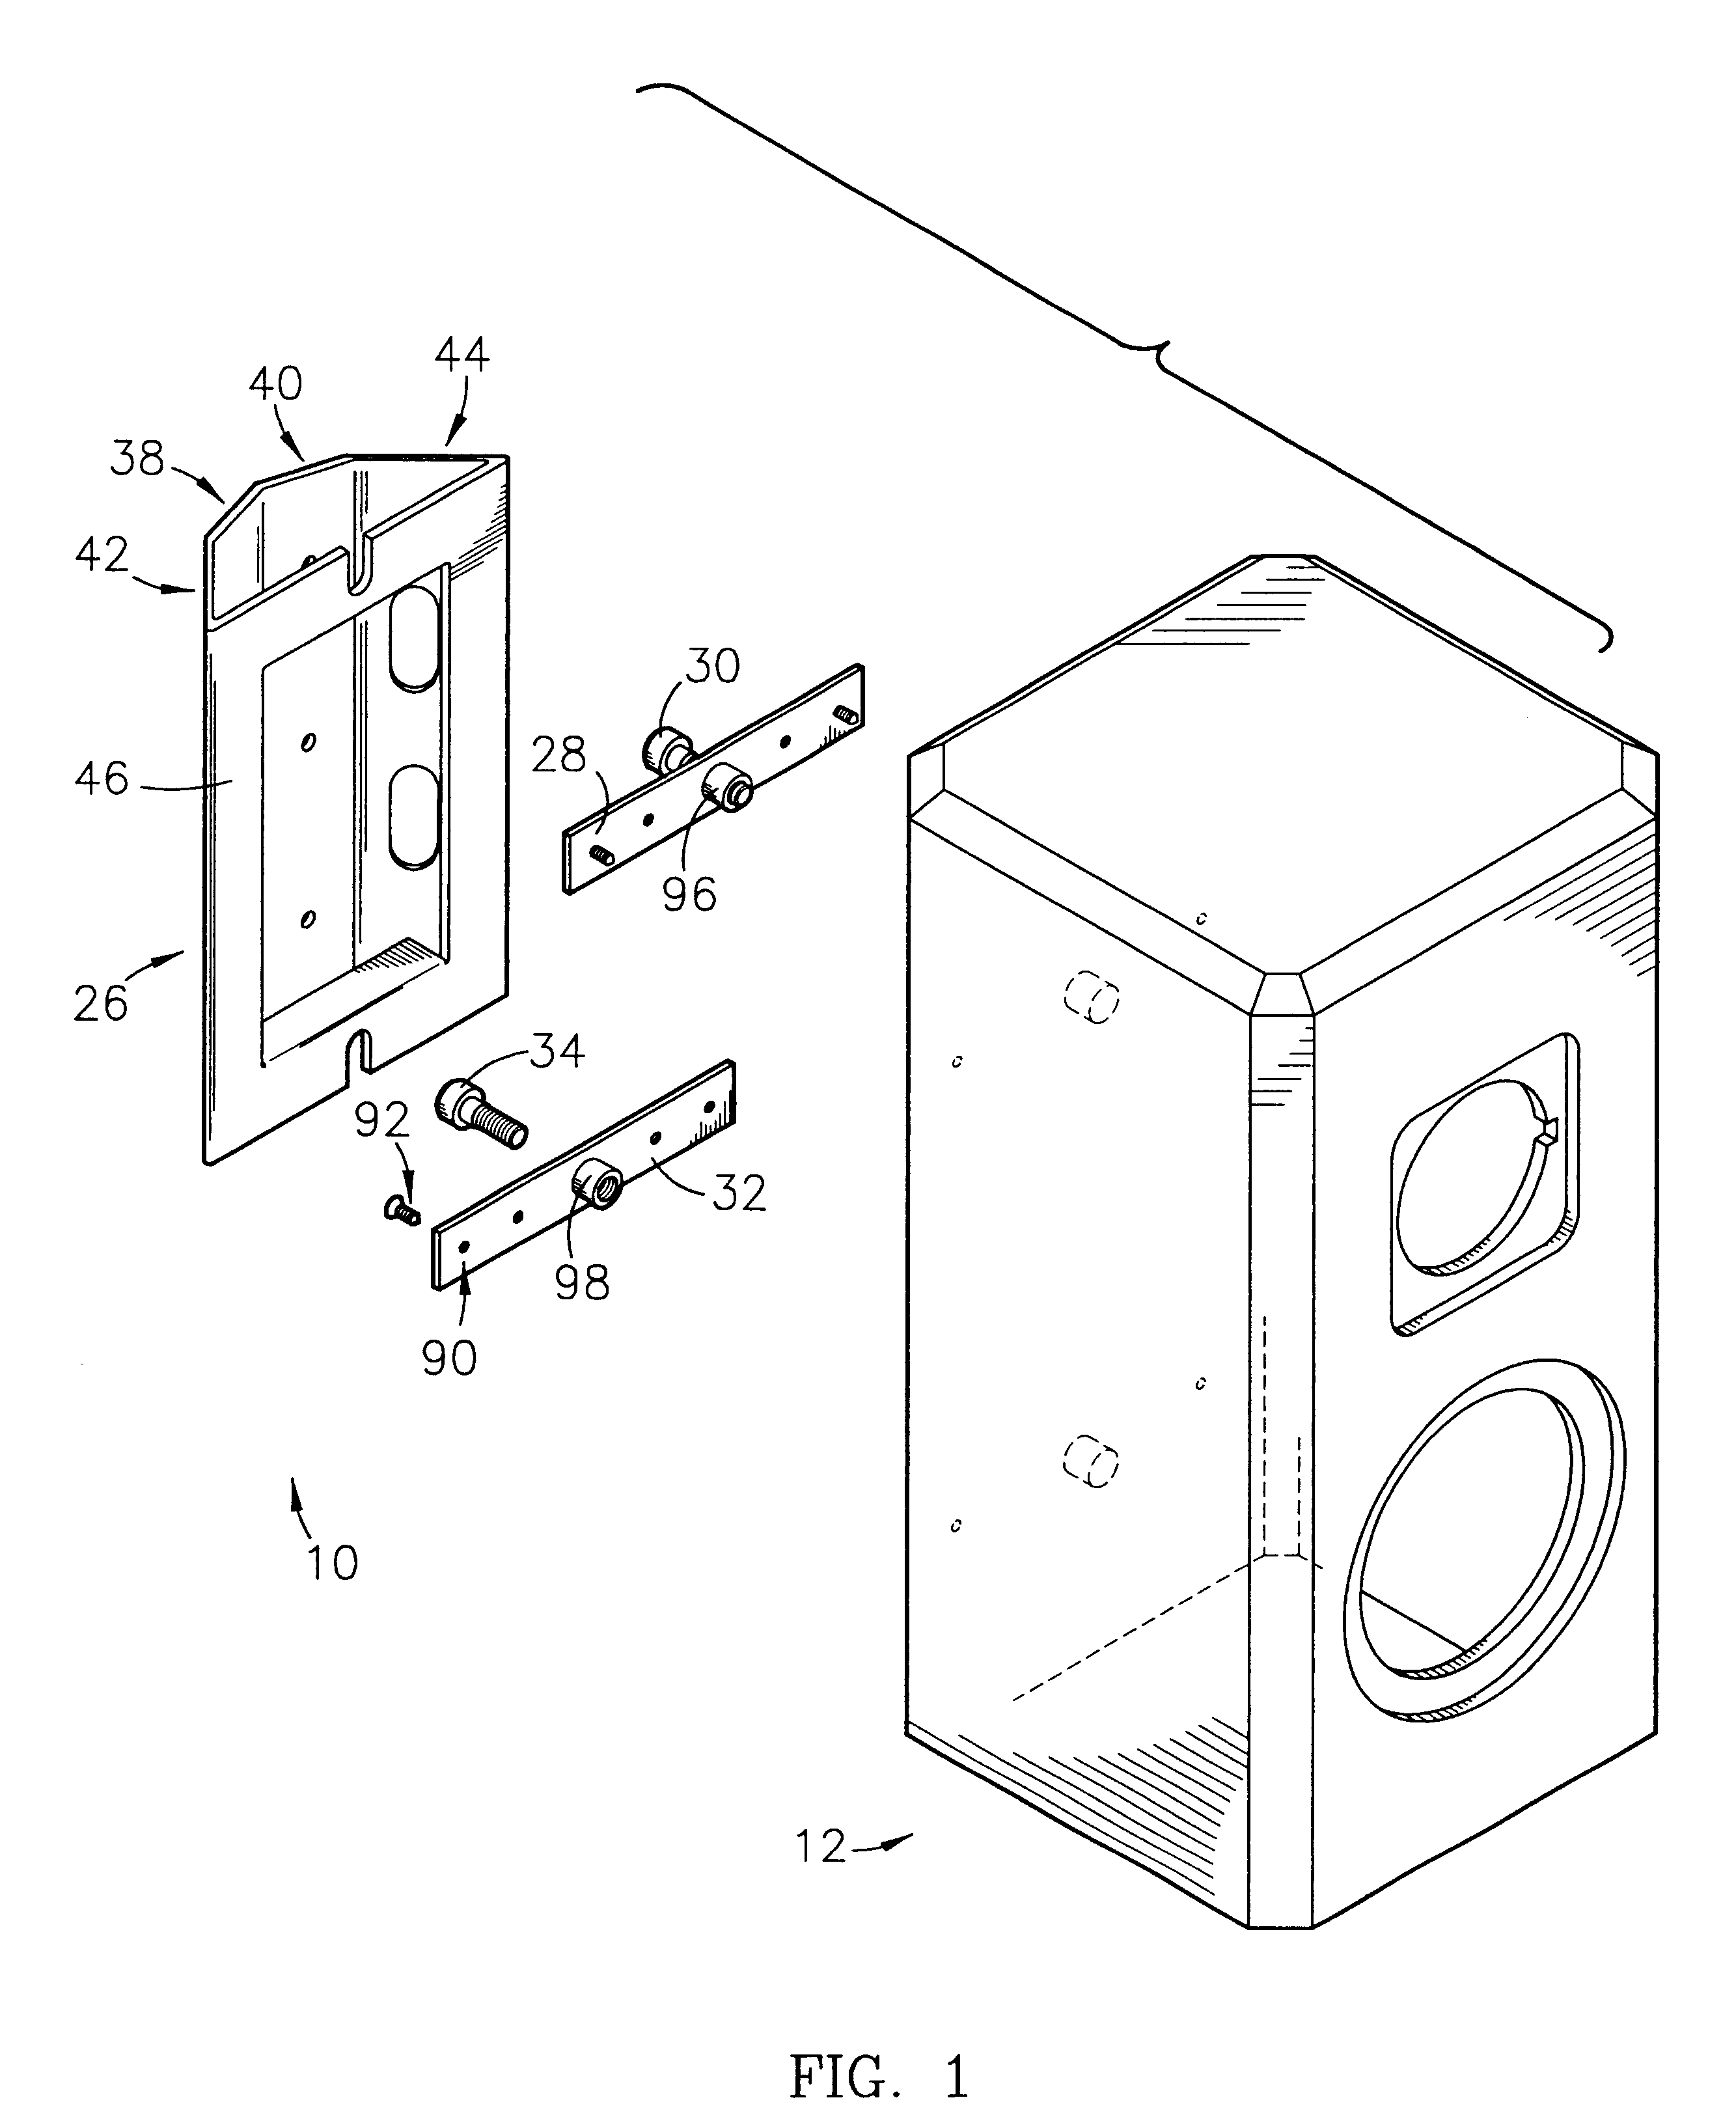 Speaker mounting device